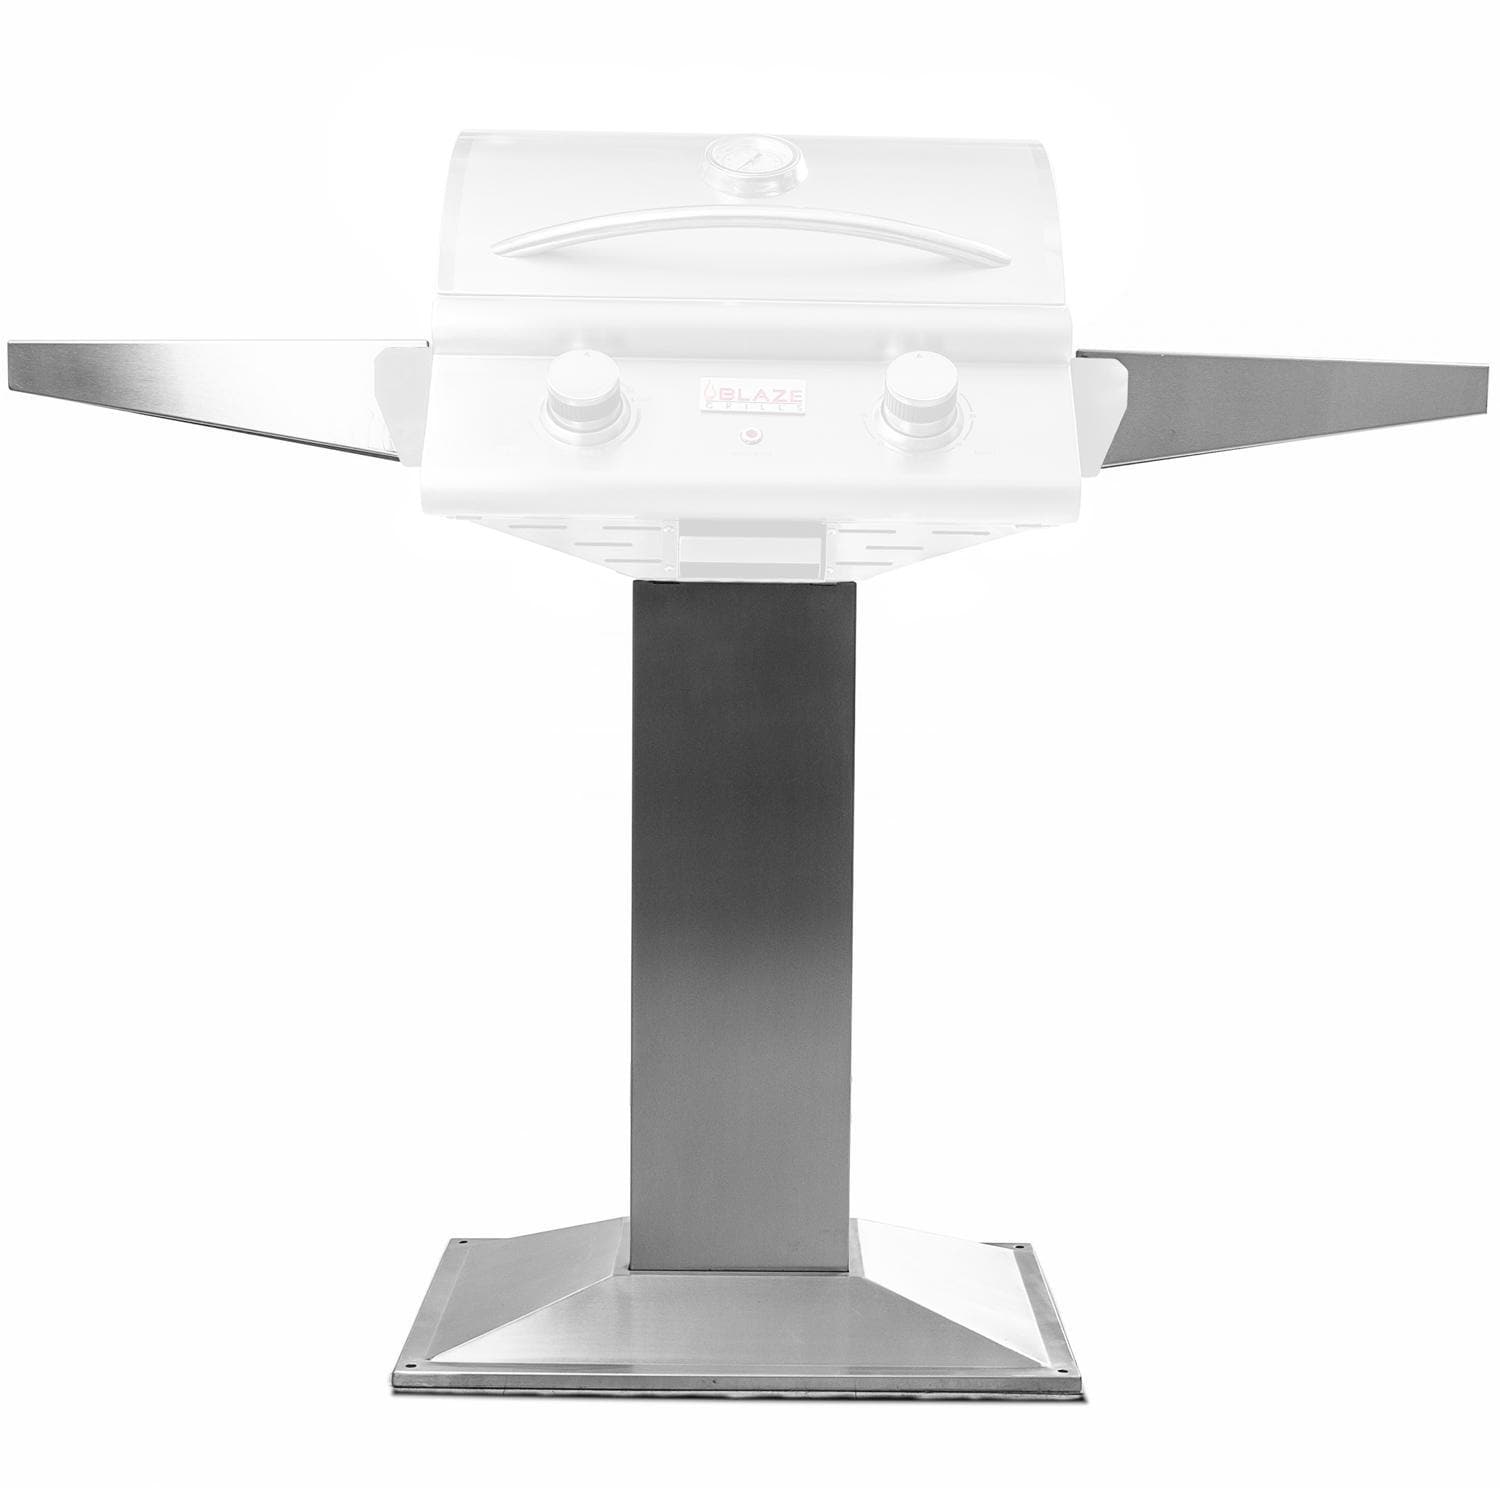 Blaze Pedestal Base With Side Shelves For Blaze 21-Inch Portable Electric Grill - BLZ-ELEC21-BASE - image 1 of 2